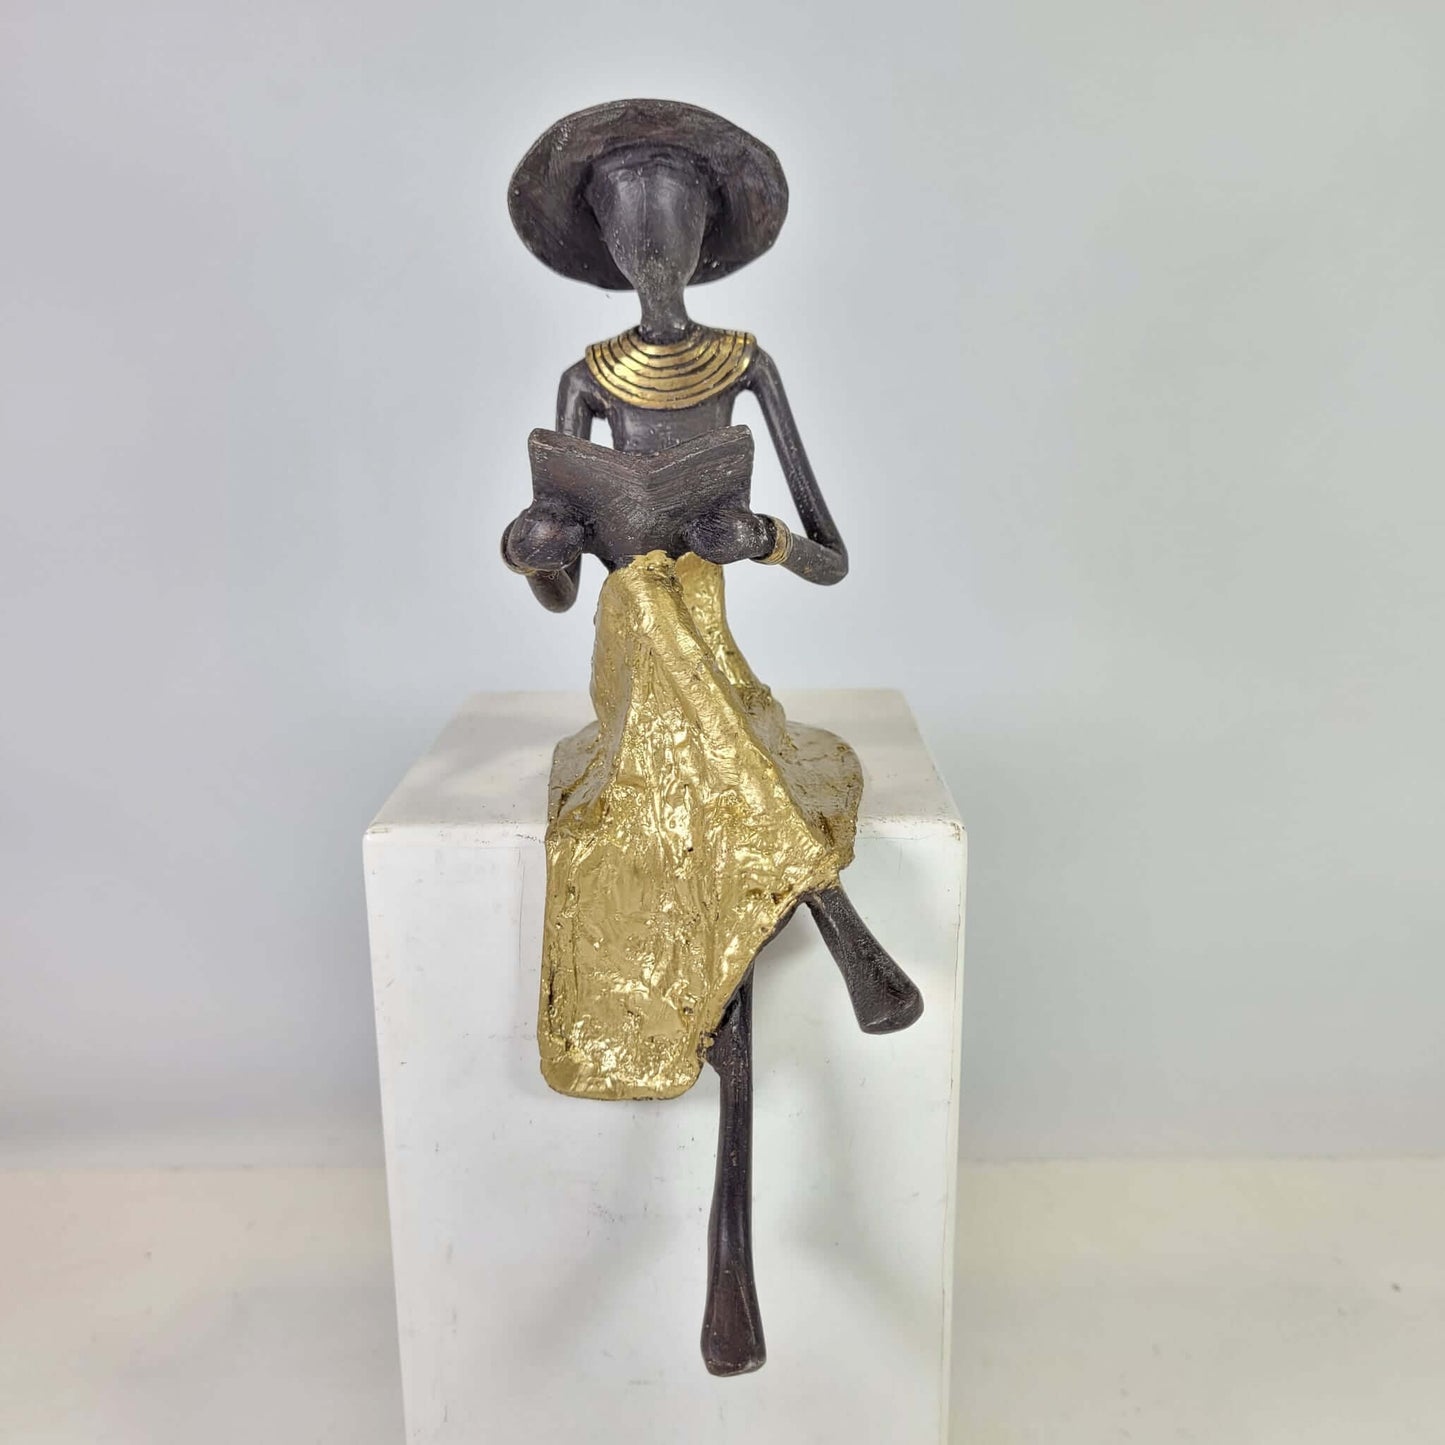 Bronze-Skulptur "Femme assise avec livre et chapeau" by Soré | verschiedene Größen und Farben